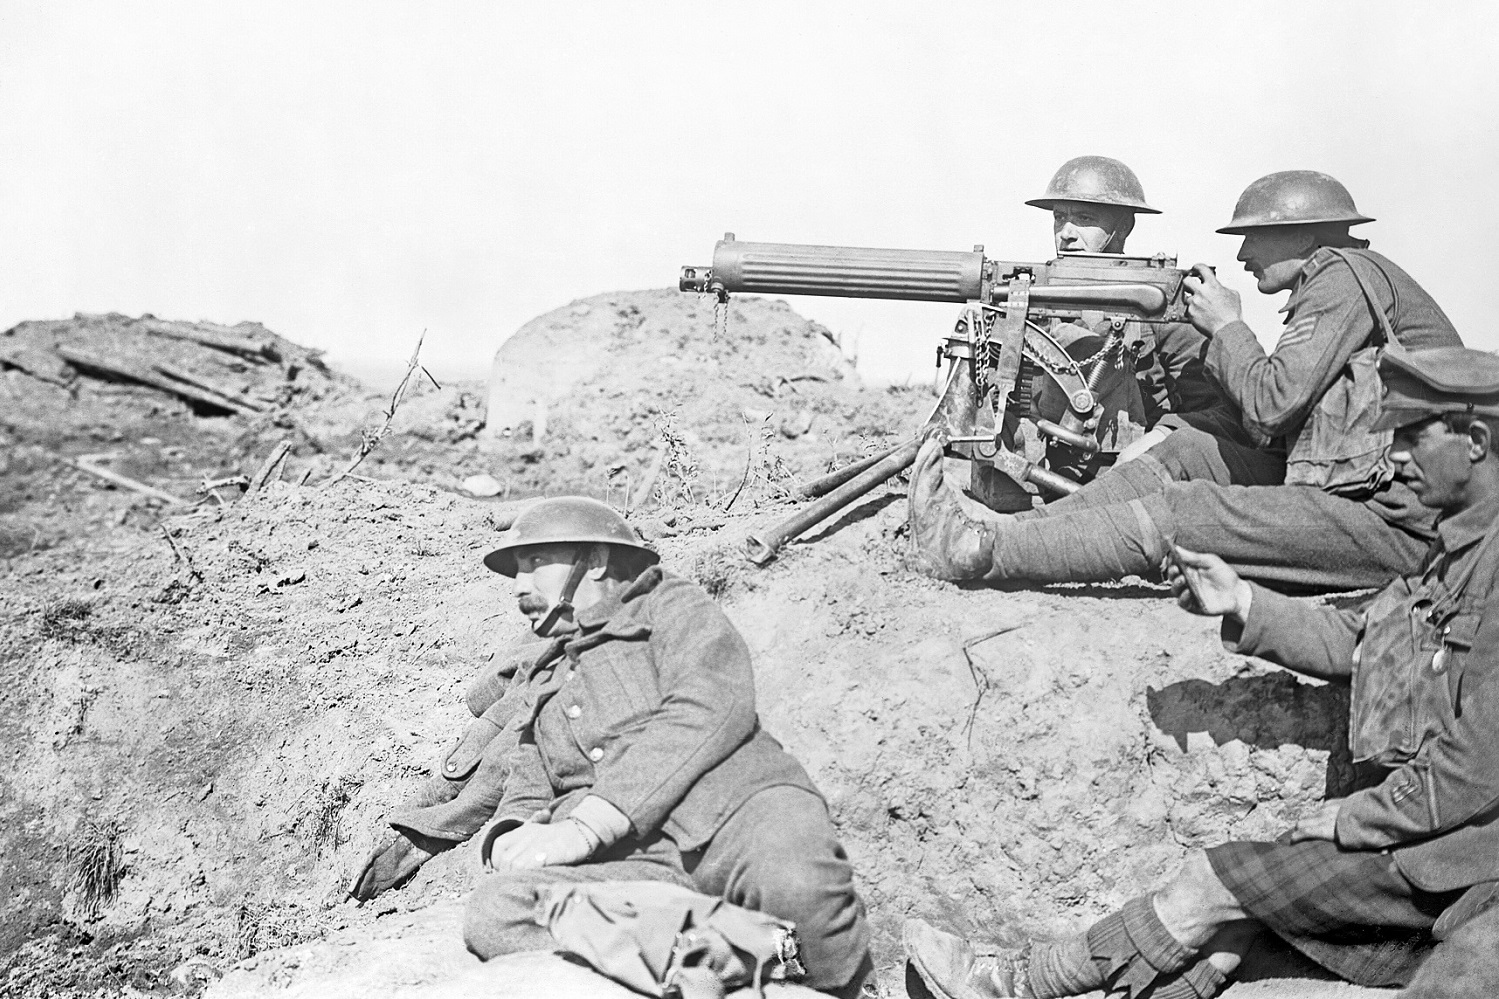 British Vickers machine gun crew during the Battle of Menin Road Ridge, World War I (Ypres Salient, West Flanders, Belgium). (Source: Ernest Brooks, Public domain, via Wikimedia Commons.)